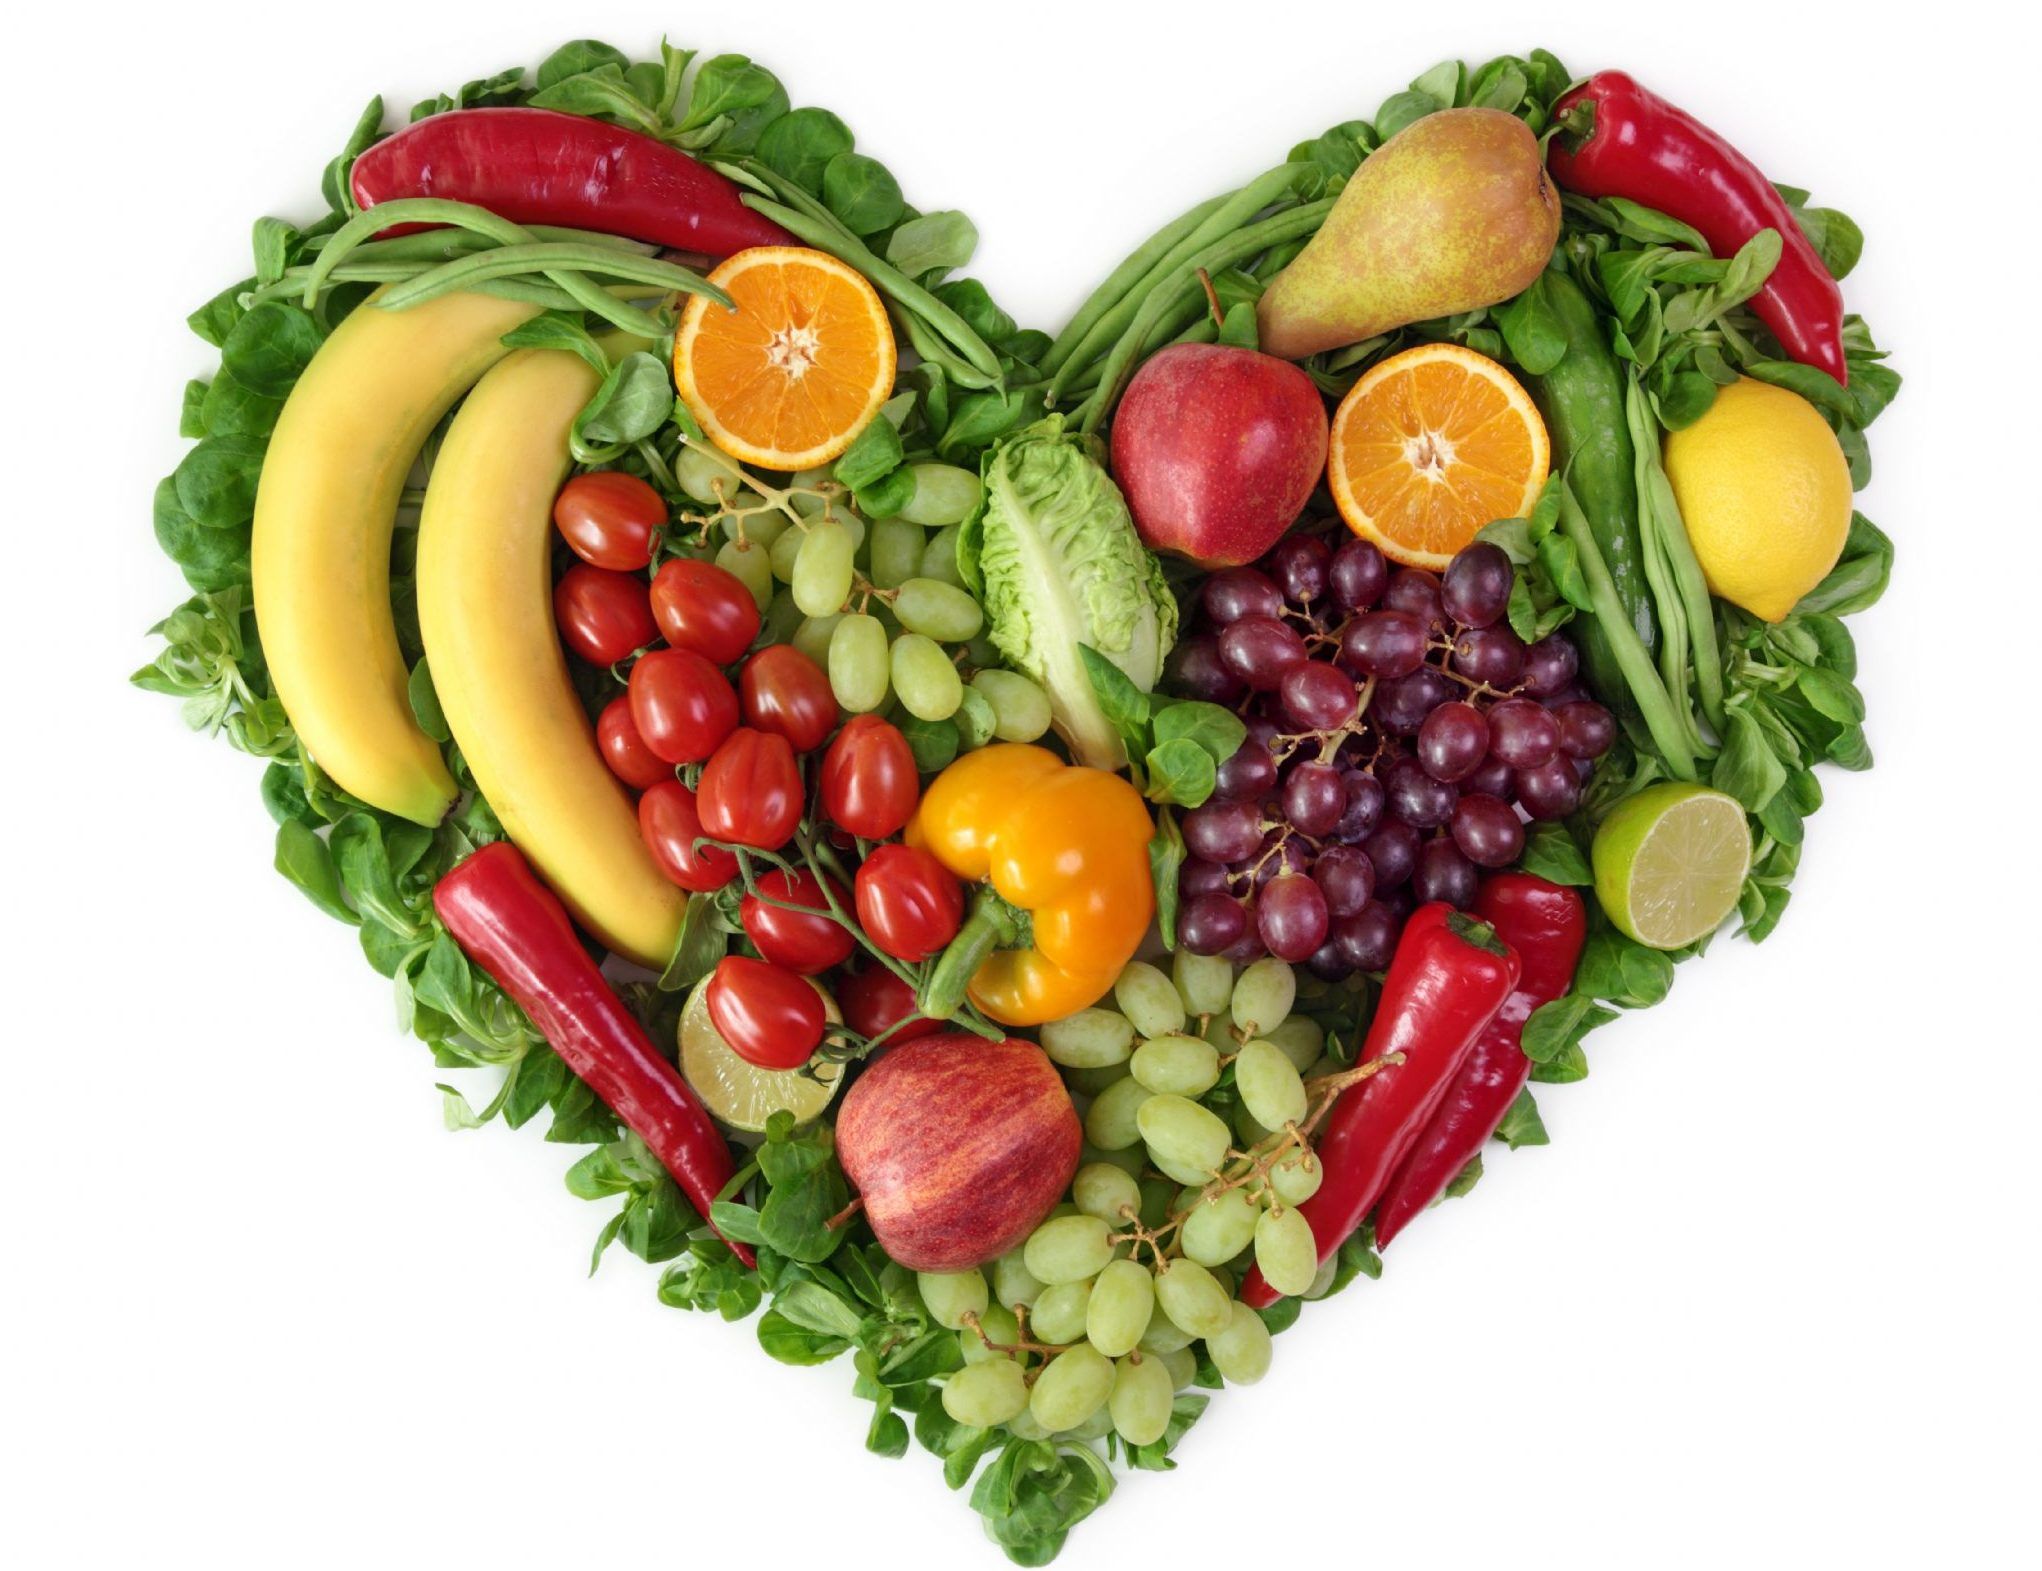 Heart healthy delicious recipes - pikollibrary